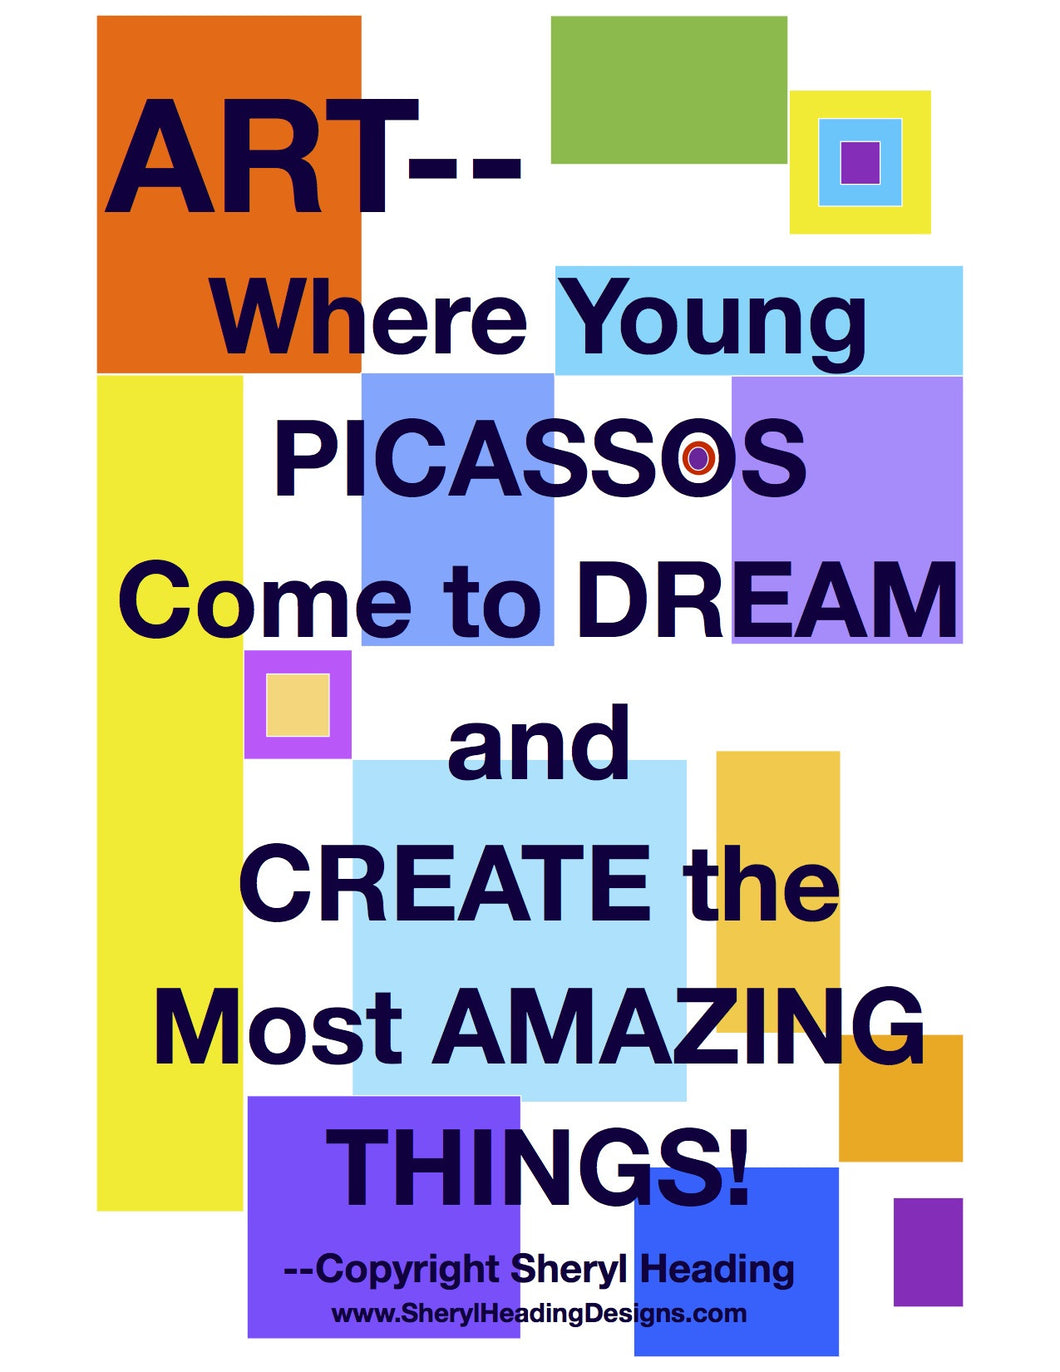 Art-Where Young Picassos Come to Dream...Art Poster - Sheryl Heading Designs